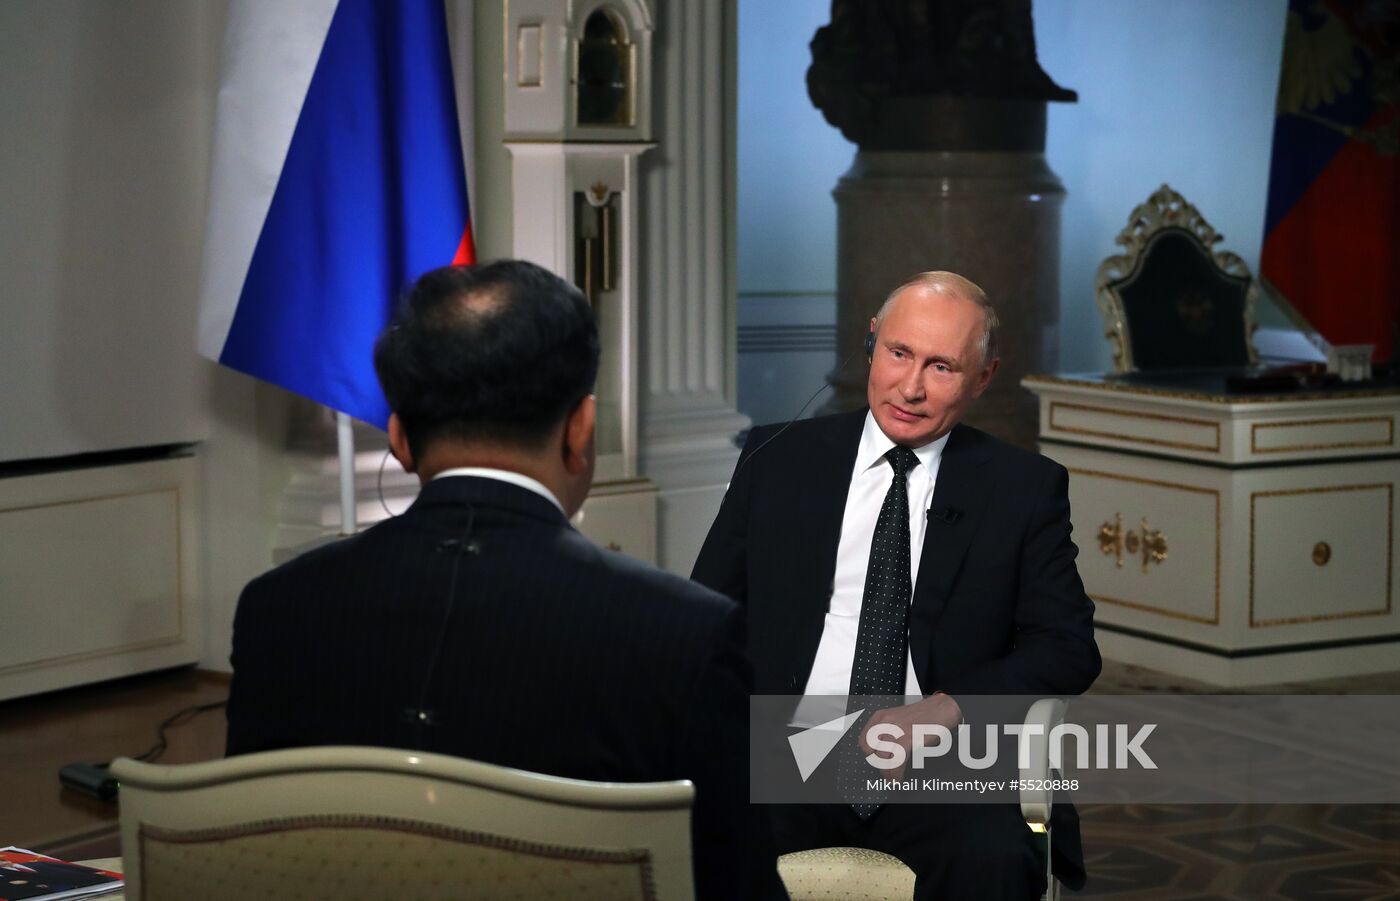 President Vladimir Putin interviewed by China Media Group